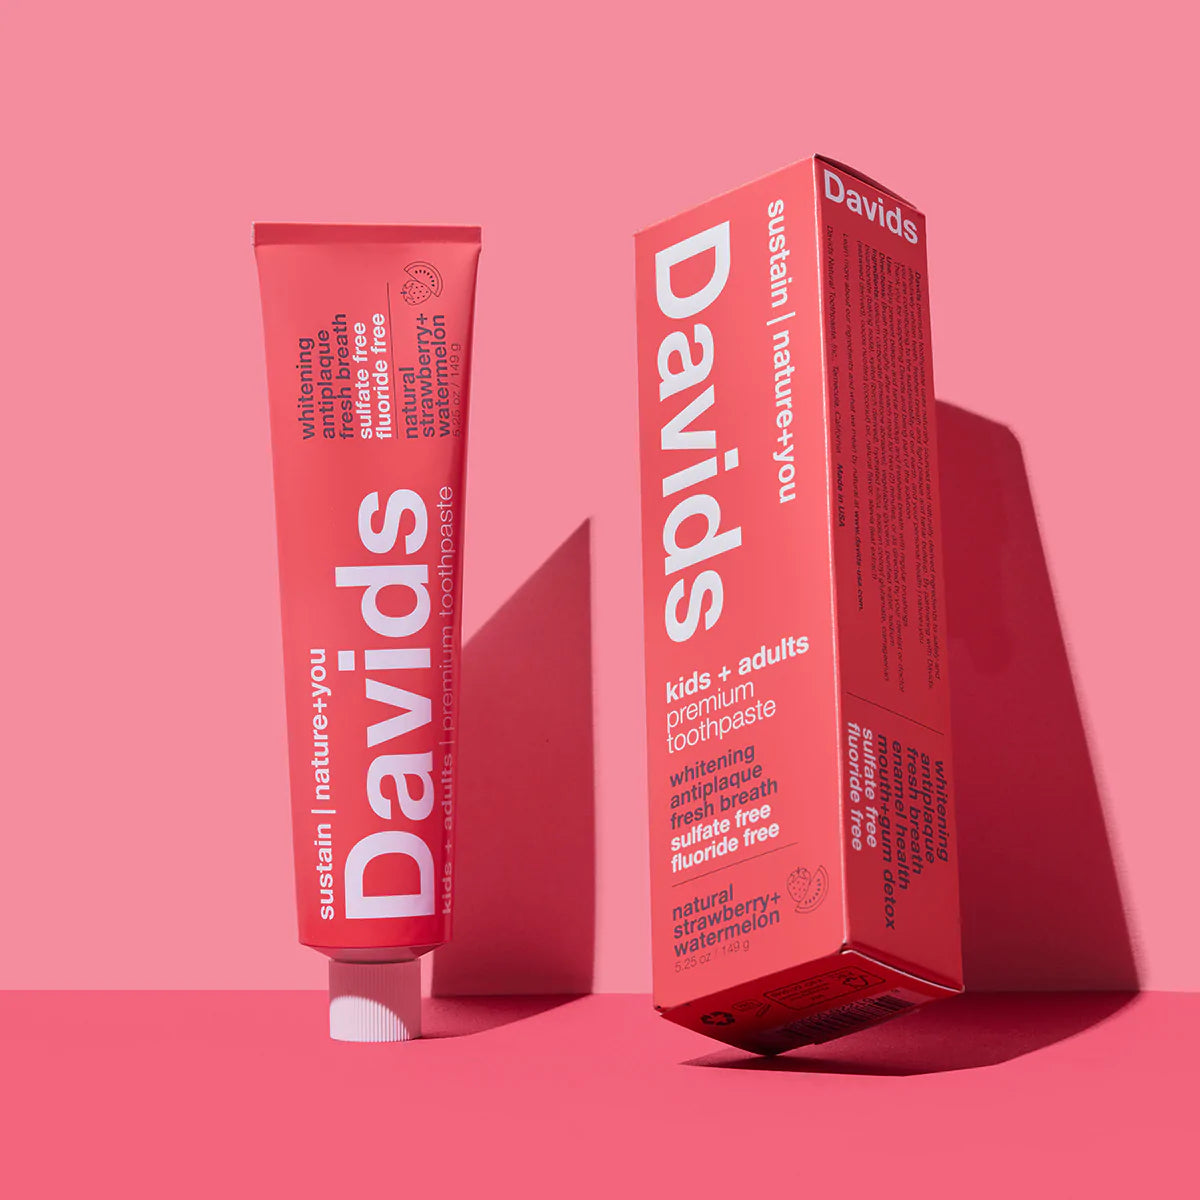 Davids Premium Natural Toothpaste - Watermelon + Strawberry